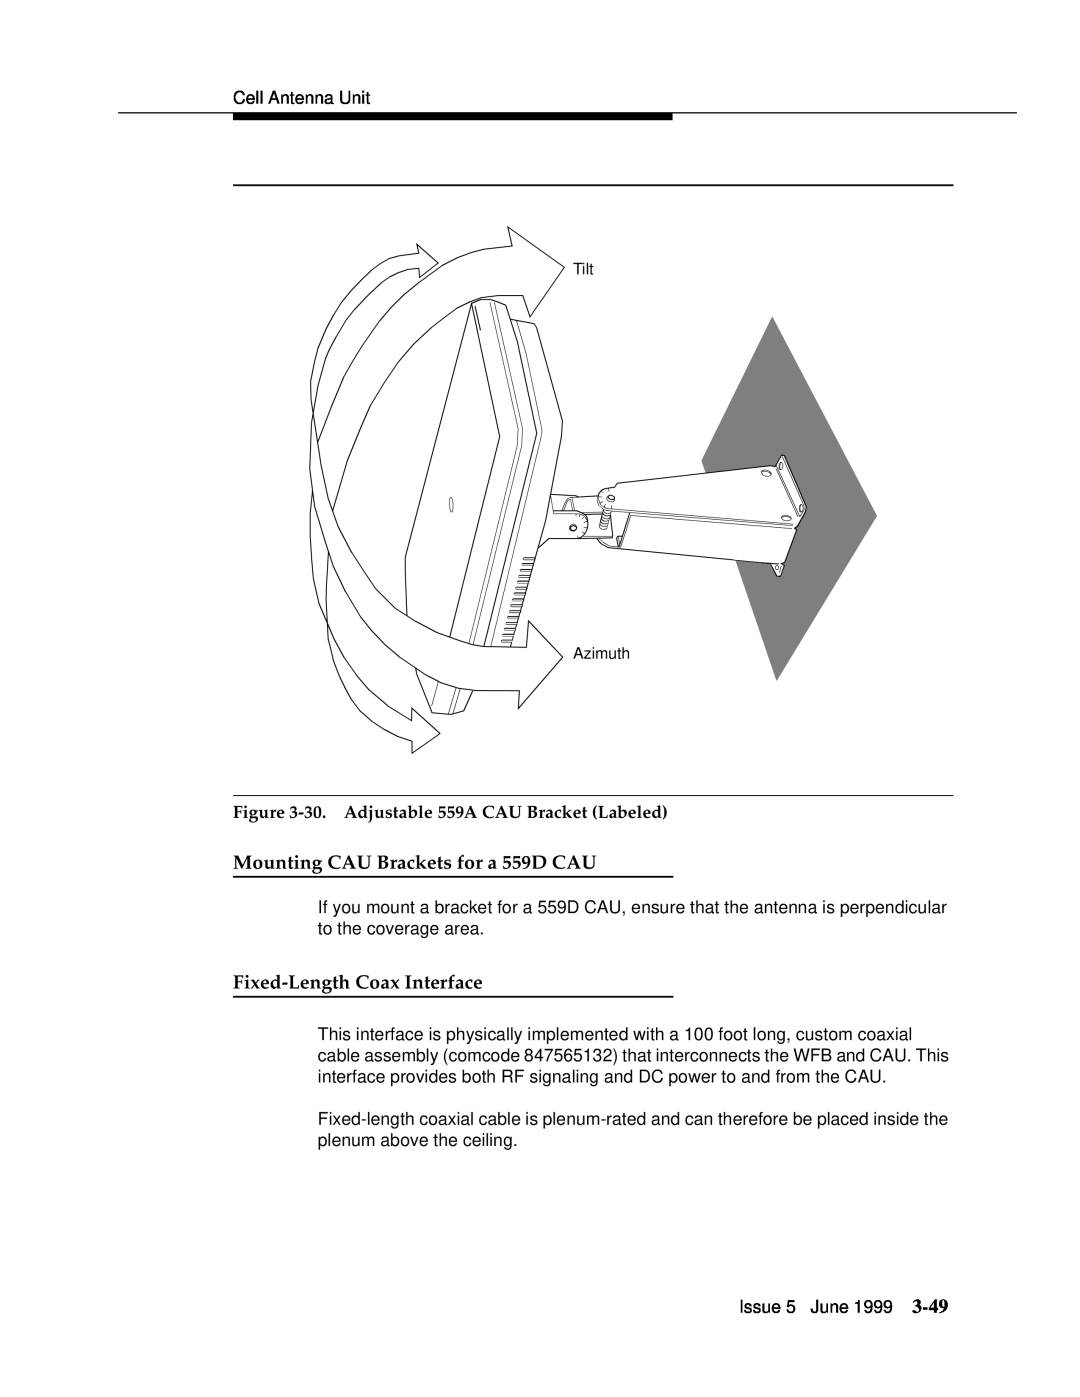 Lucent Technologies 555-232-102 manual Mounting CAU Brackets for a 559D CAU, Fixed-Length Coax Interface 